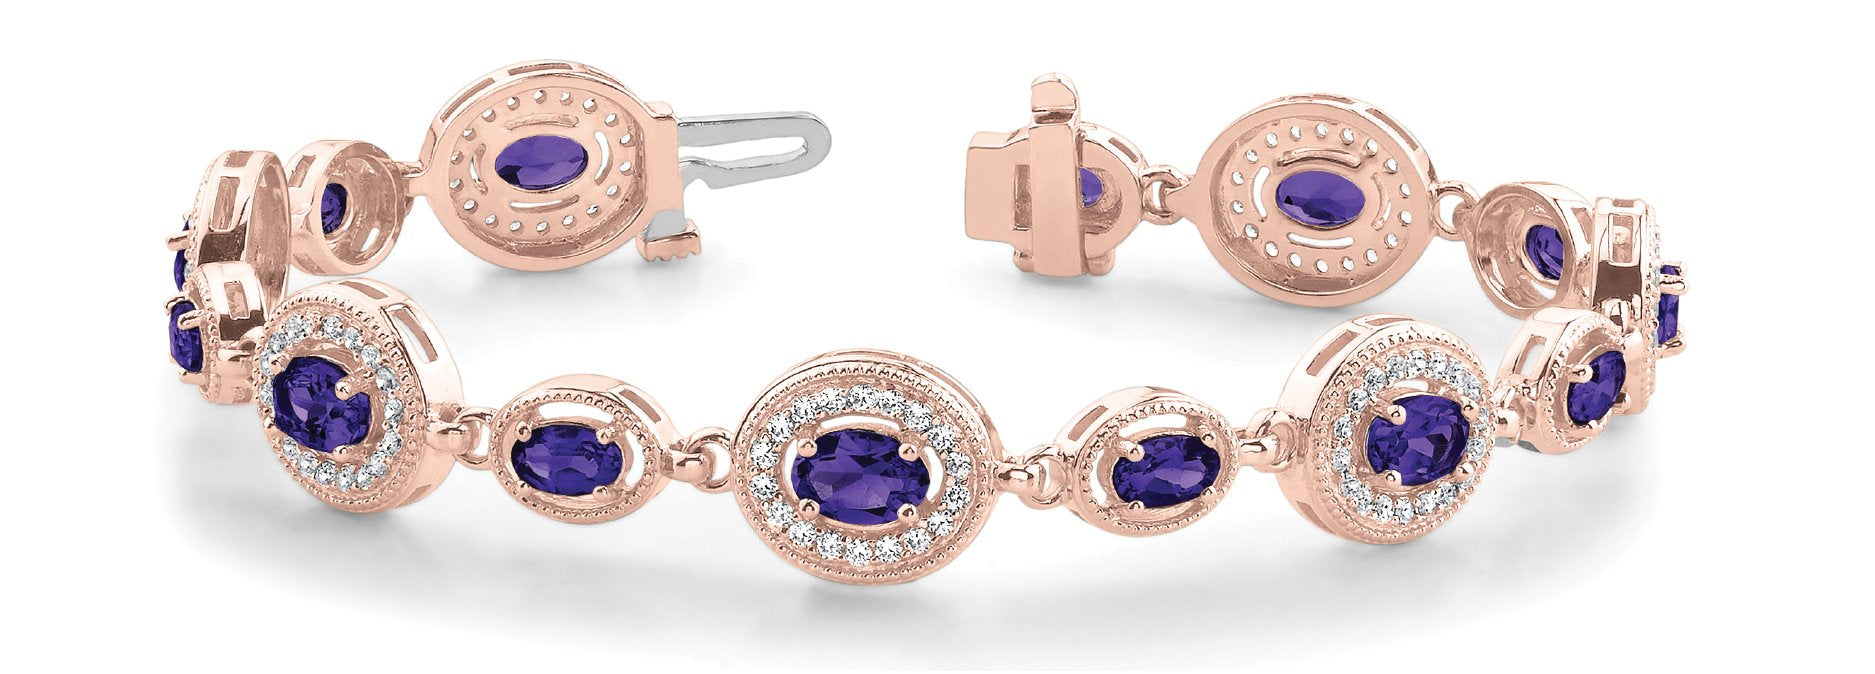 Sapphire 7.45ct & Diamond 1.42ct Bracelet - 14kt Rose Gold